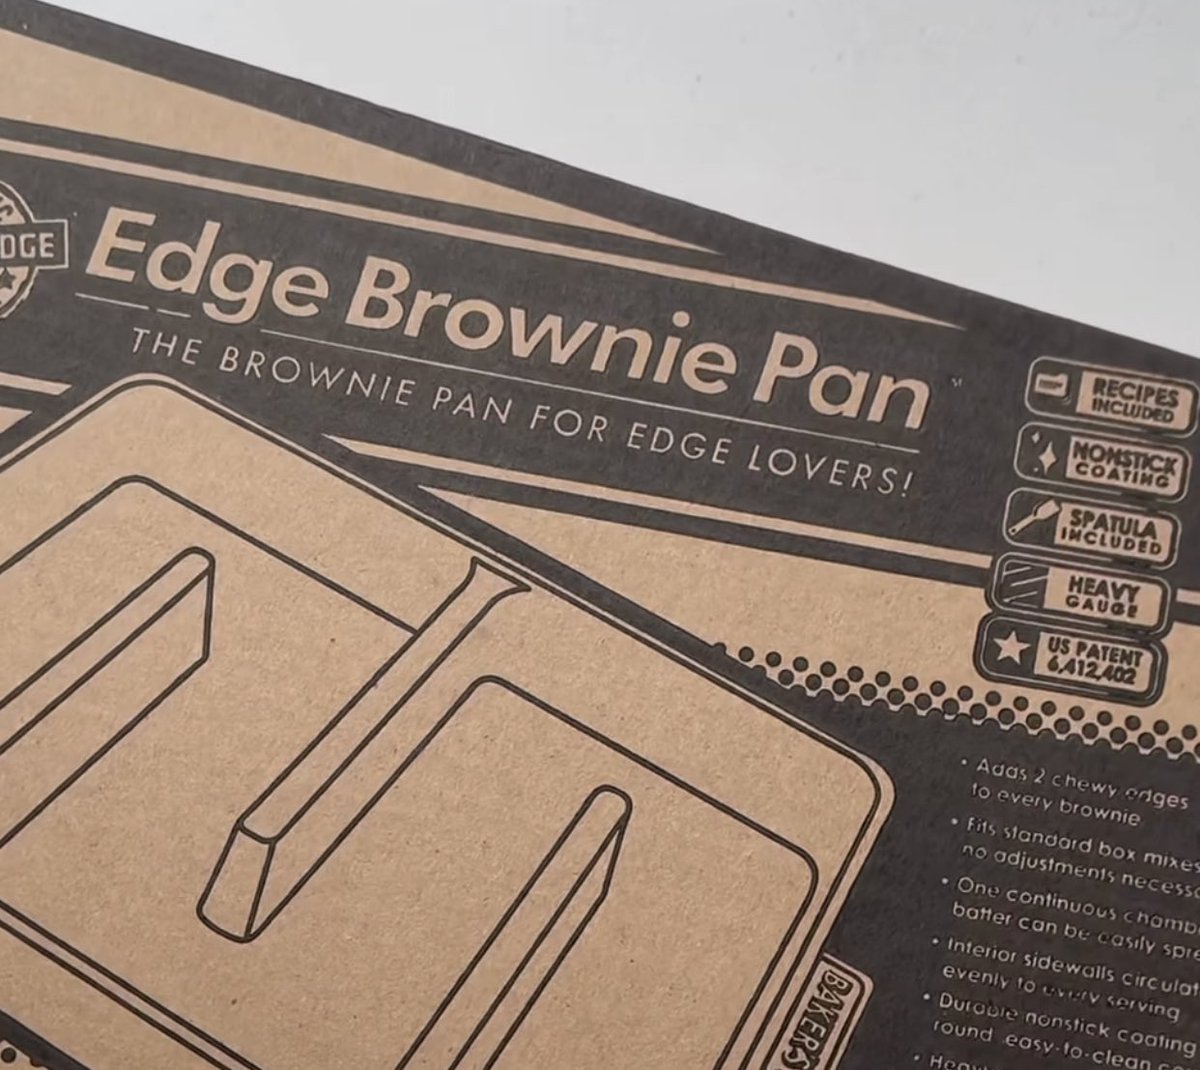 Baker's Edge Brownie Pan - All Edges!